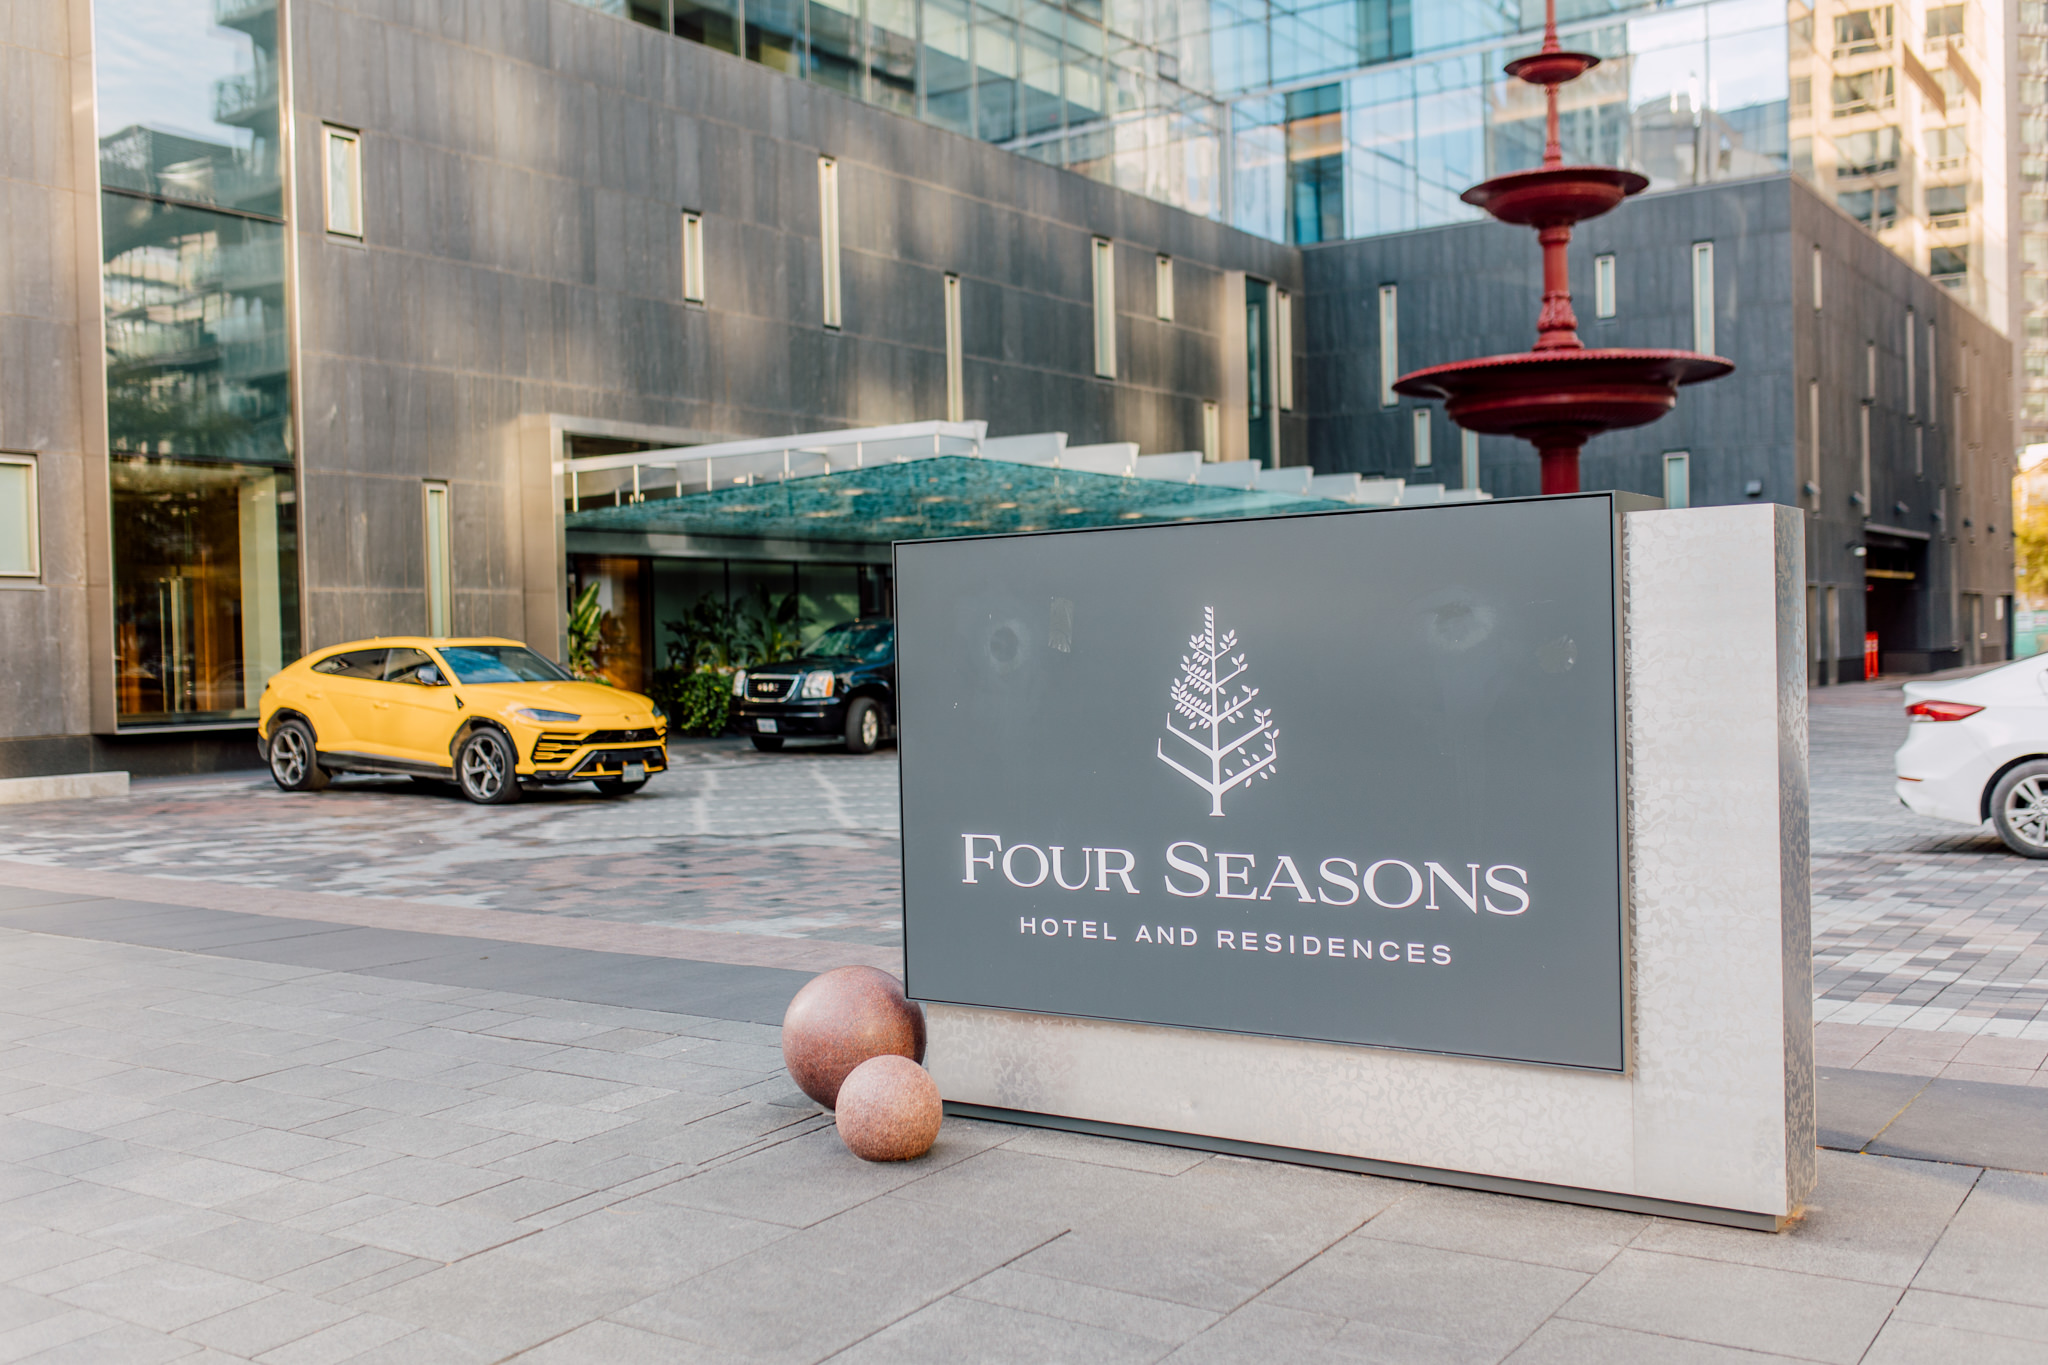 Four seasons, hotel, Toronto